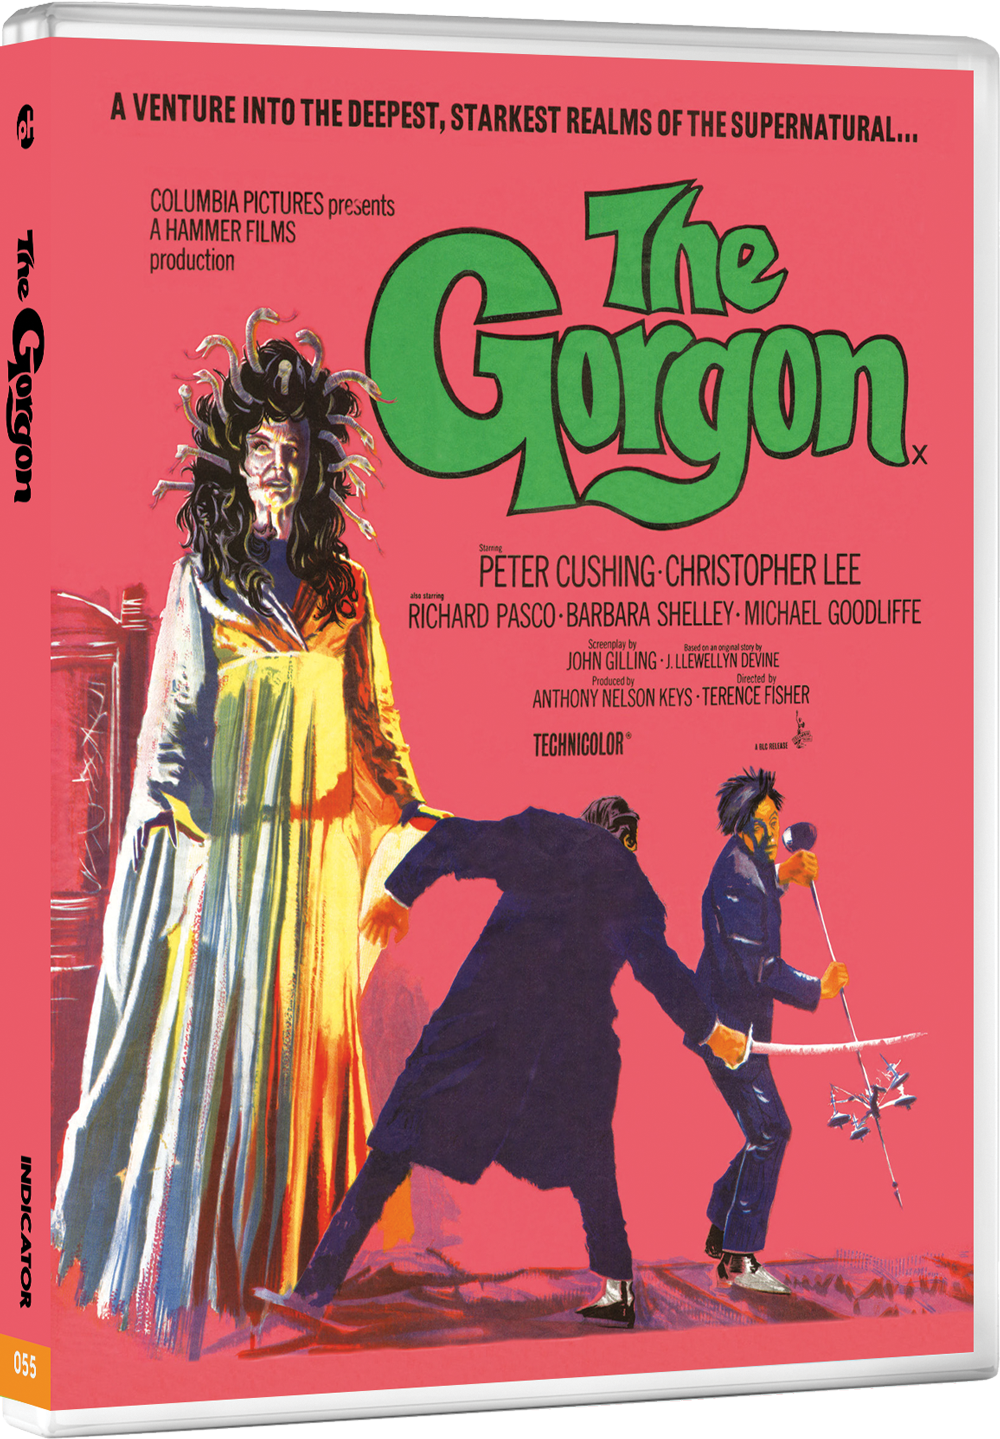 THE GORGON - Single